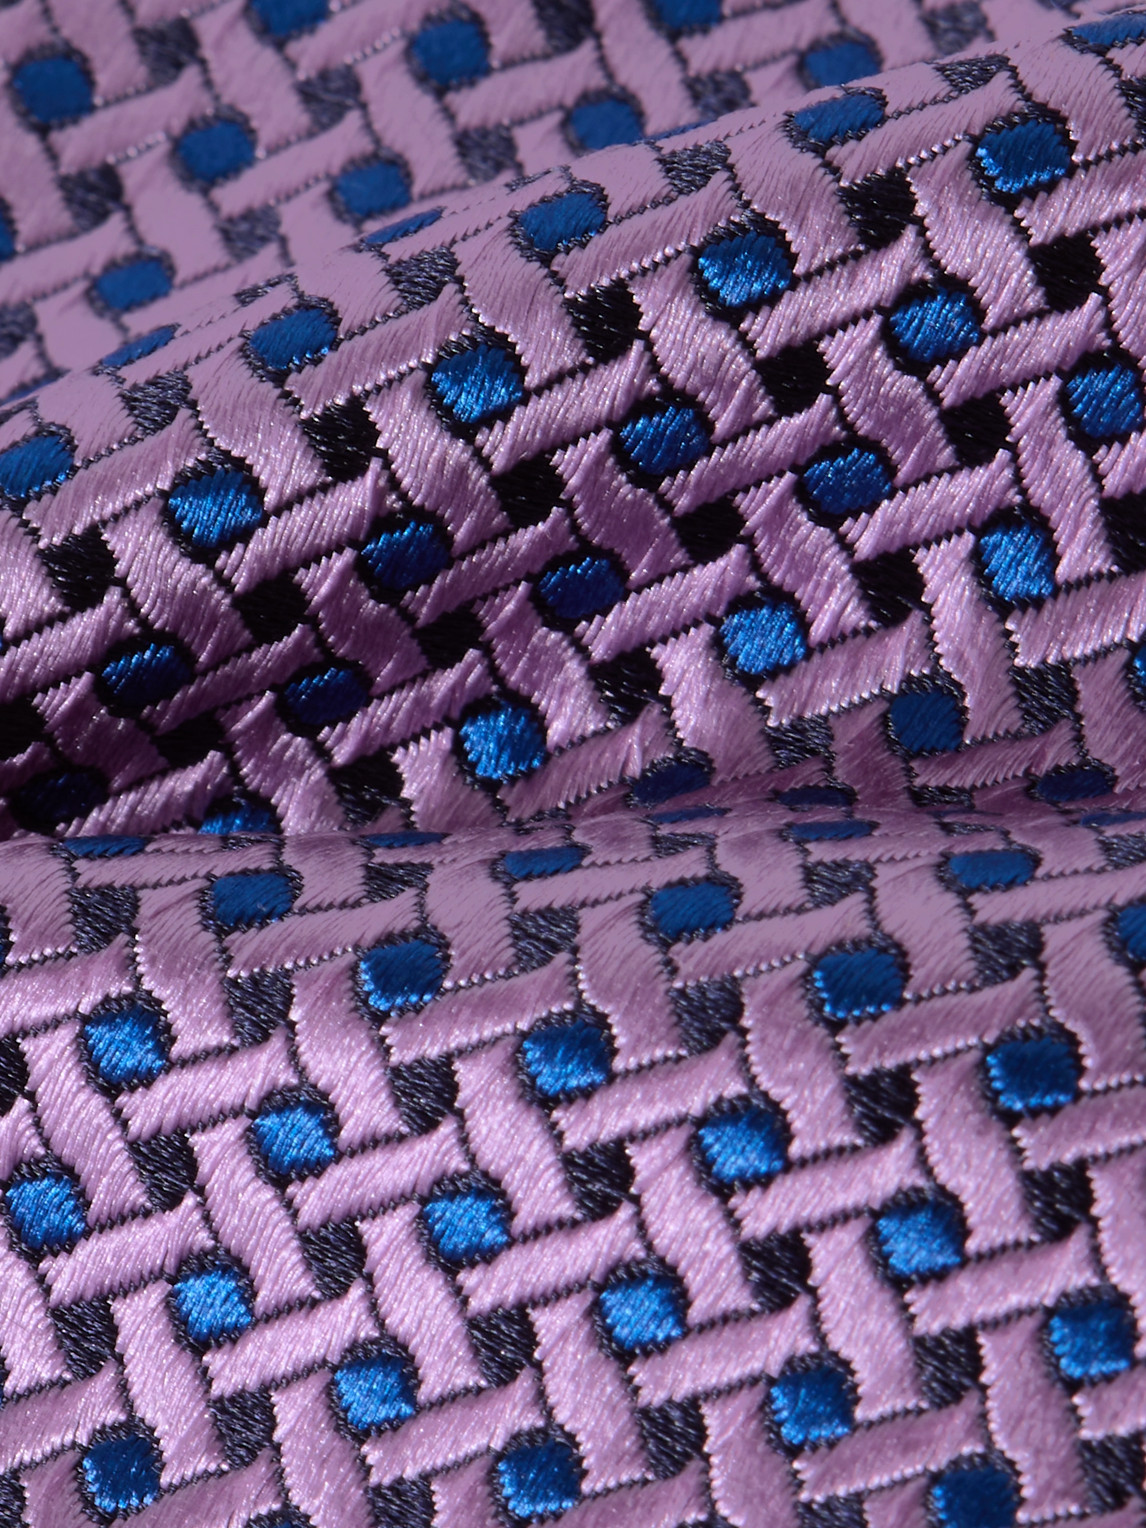 Shop Charvet 8.5cm Silk-jacquard Tie In Purple